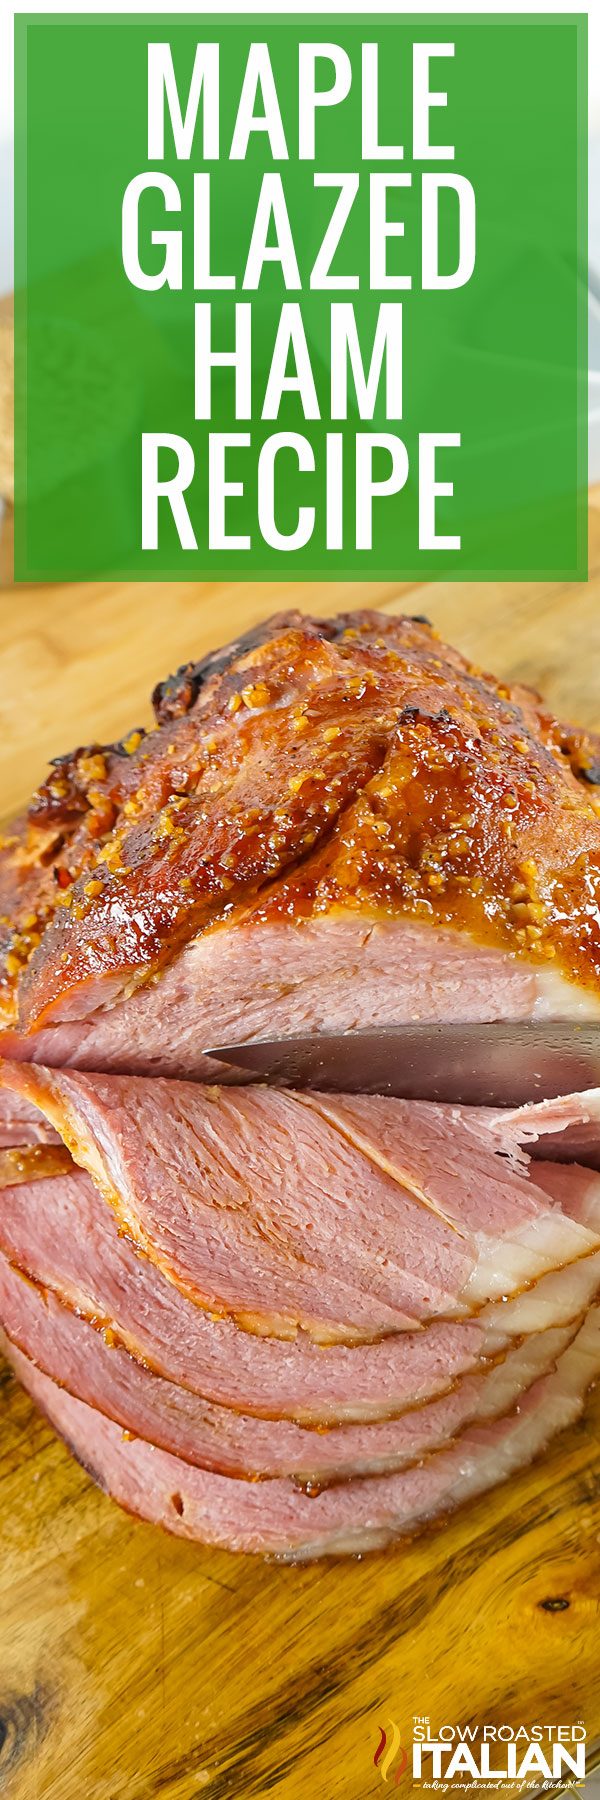 titled image (and shown): Maple Glazed Ham recipe